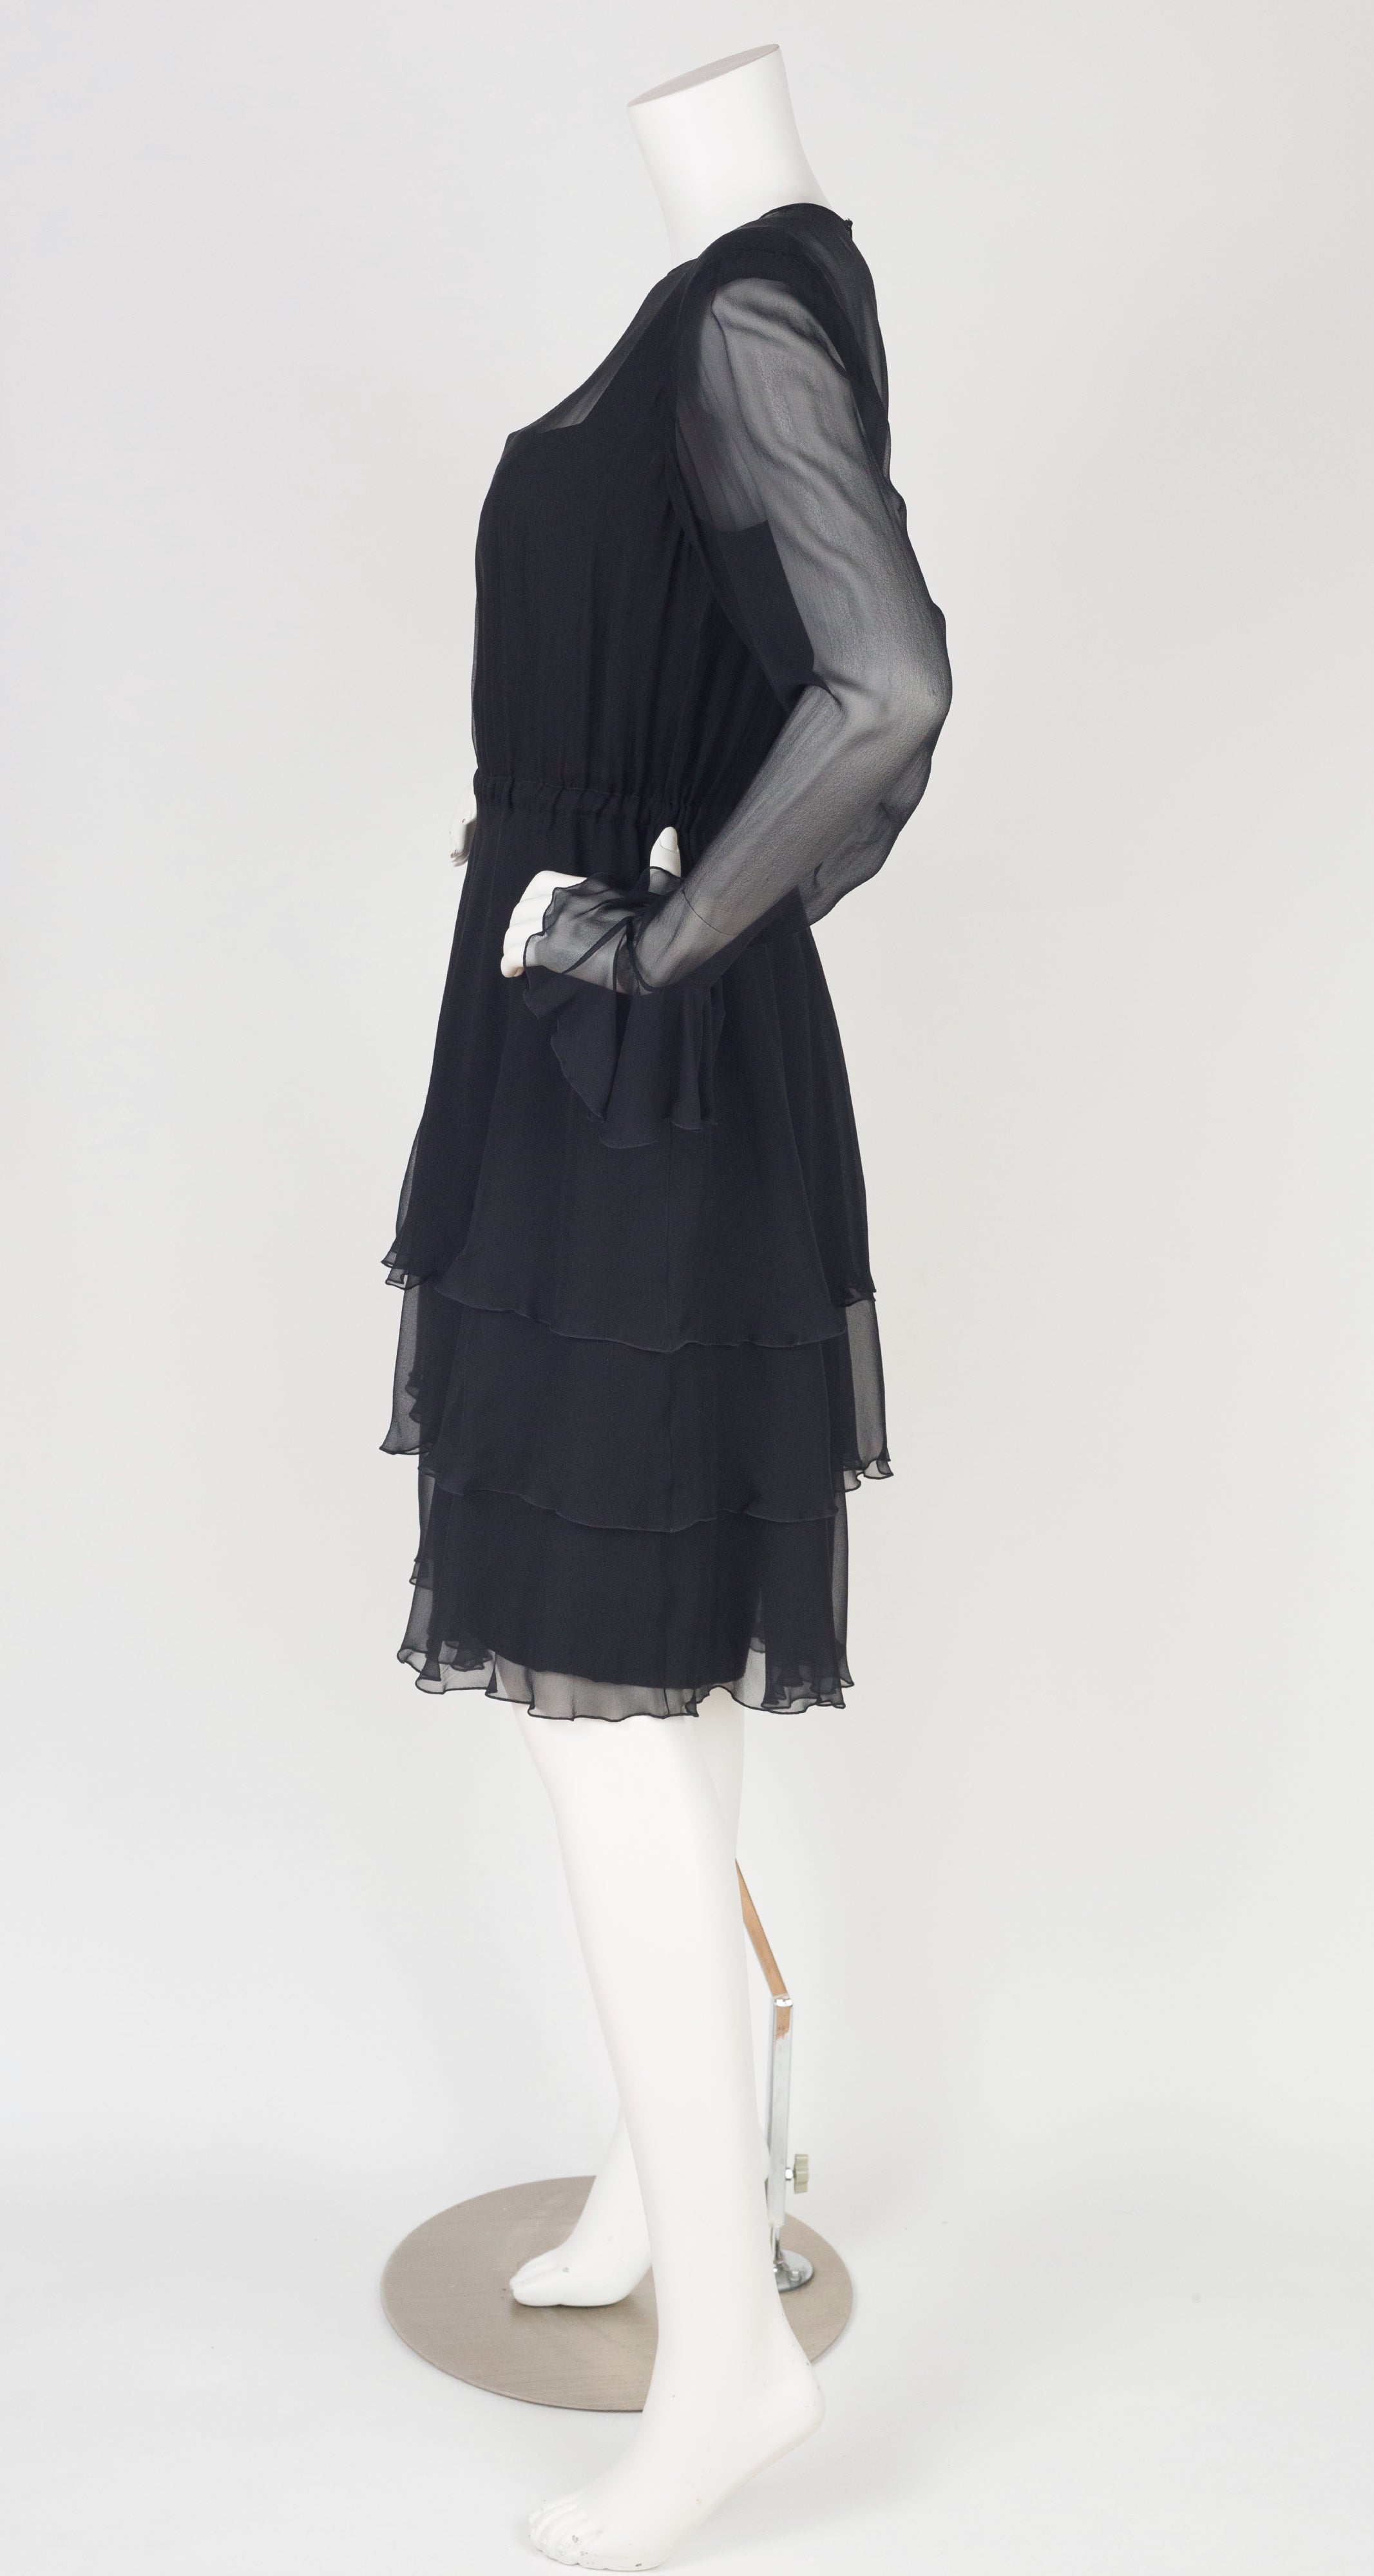 1990s Black Silk Chiffon Ruffle Evening Dress